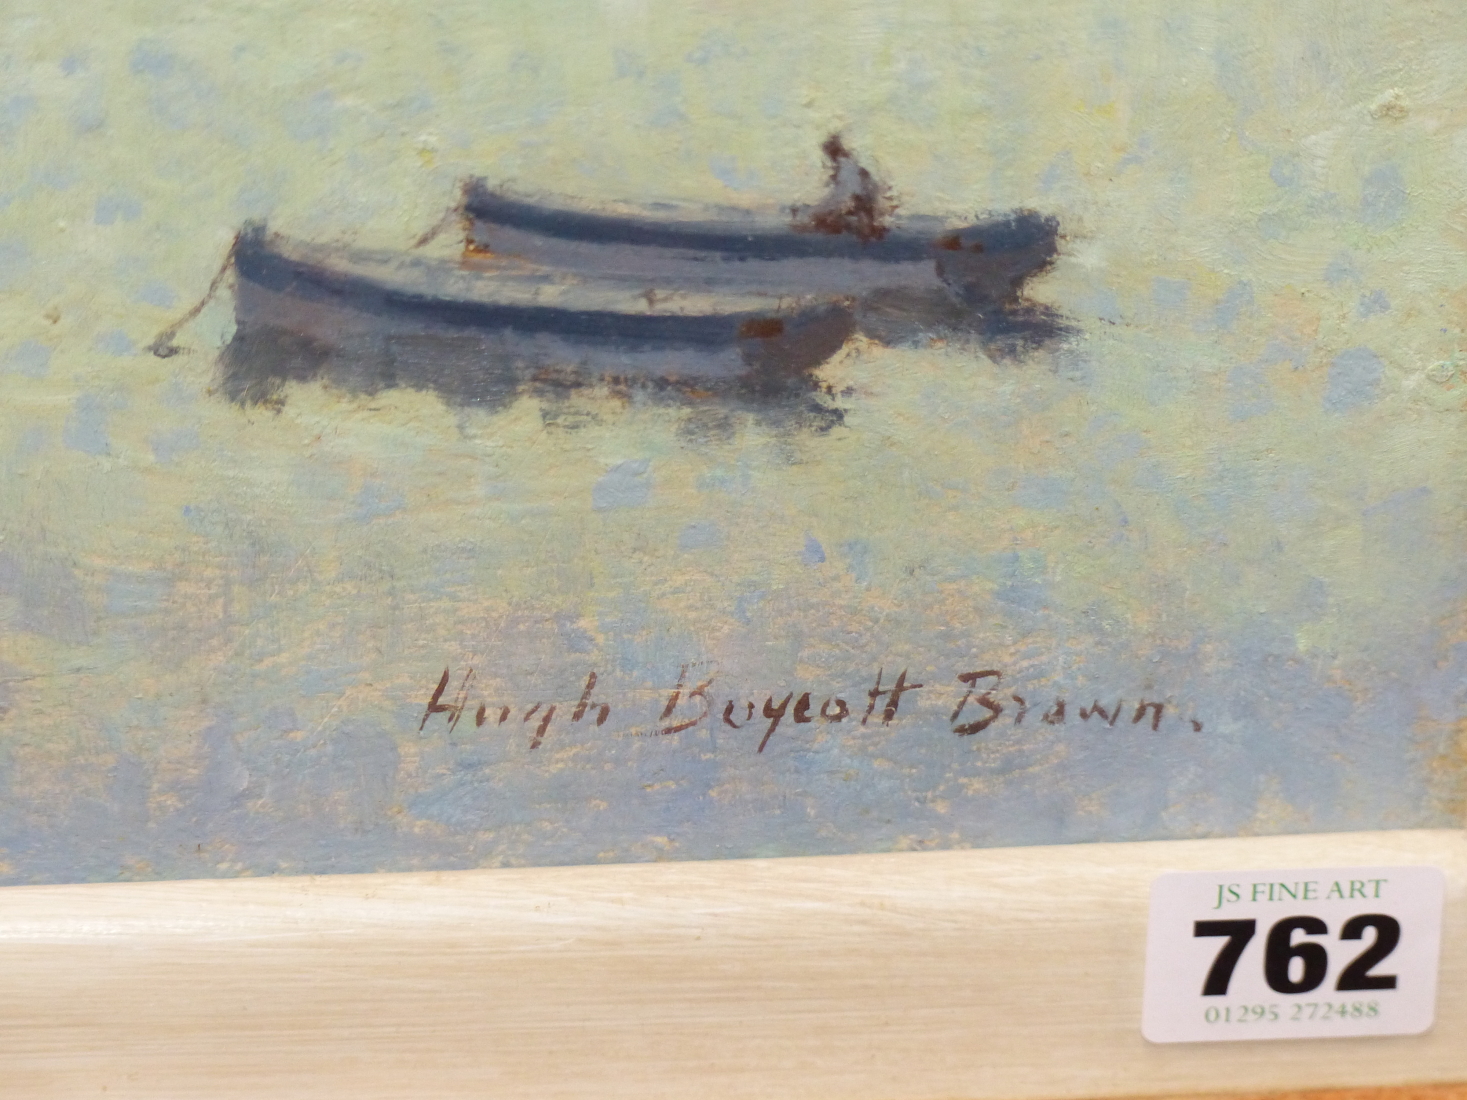 HUGH BOYCOTT BROWN (1909-90), ARR. SAILING SUFFOLK, OIL ON HARDBOARD, SIGNED LOWER RIGHT. 39.5 49. - Image 4 of 6